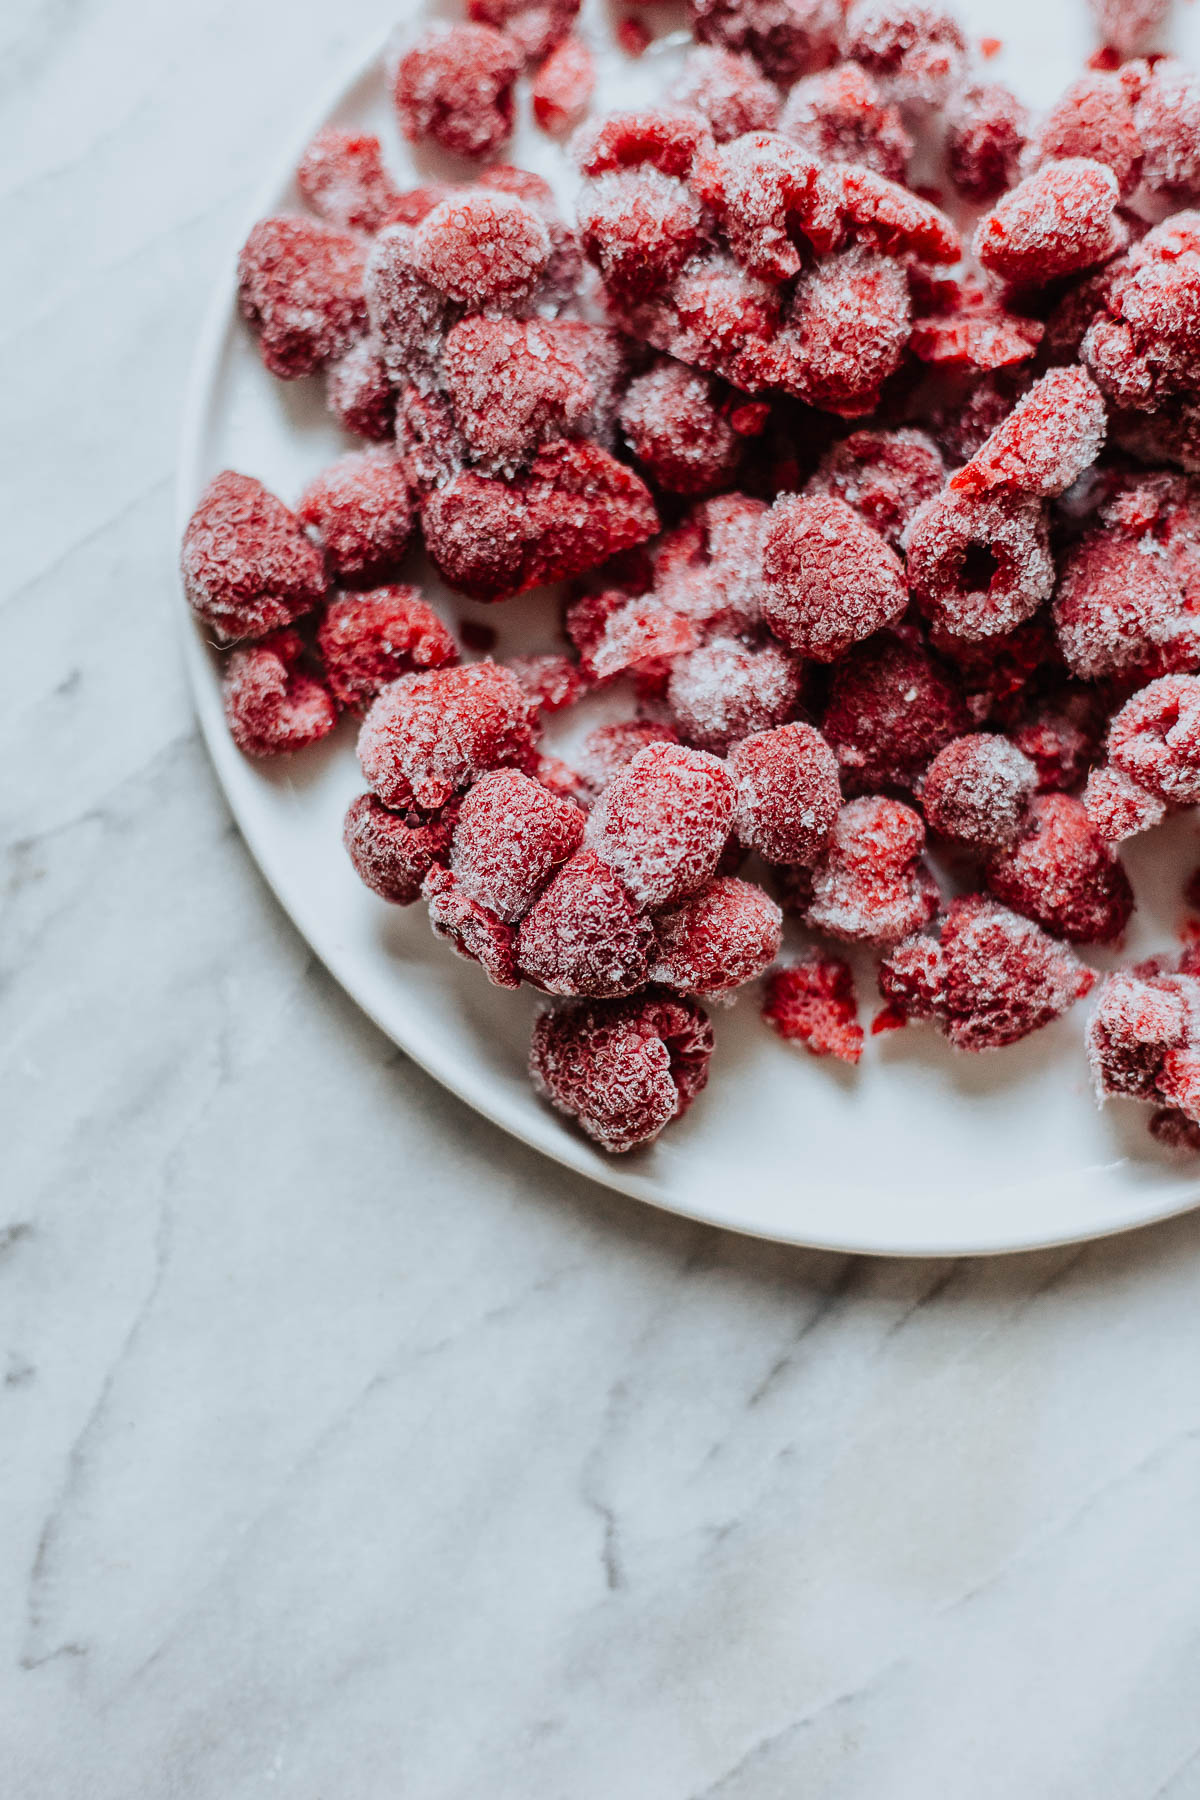 A plate of frozen raspberries.